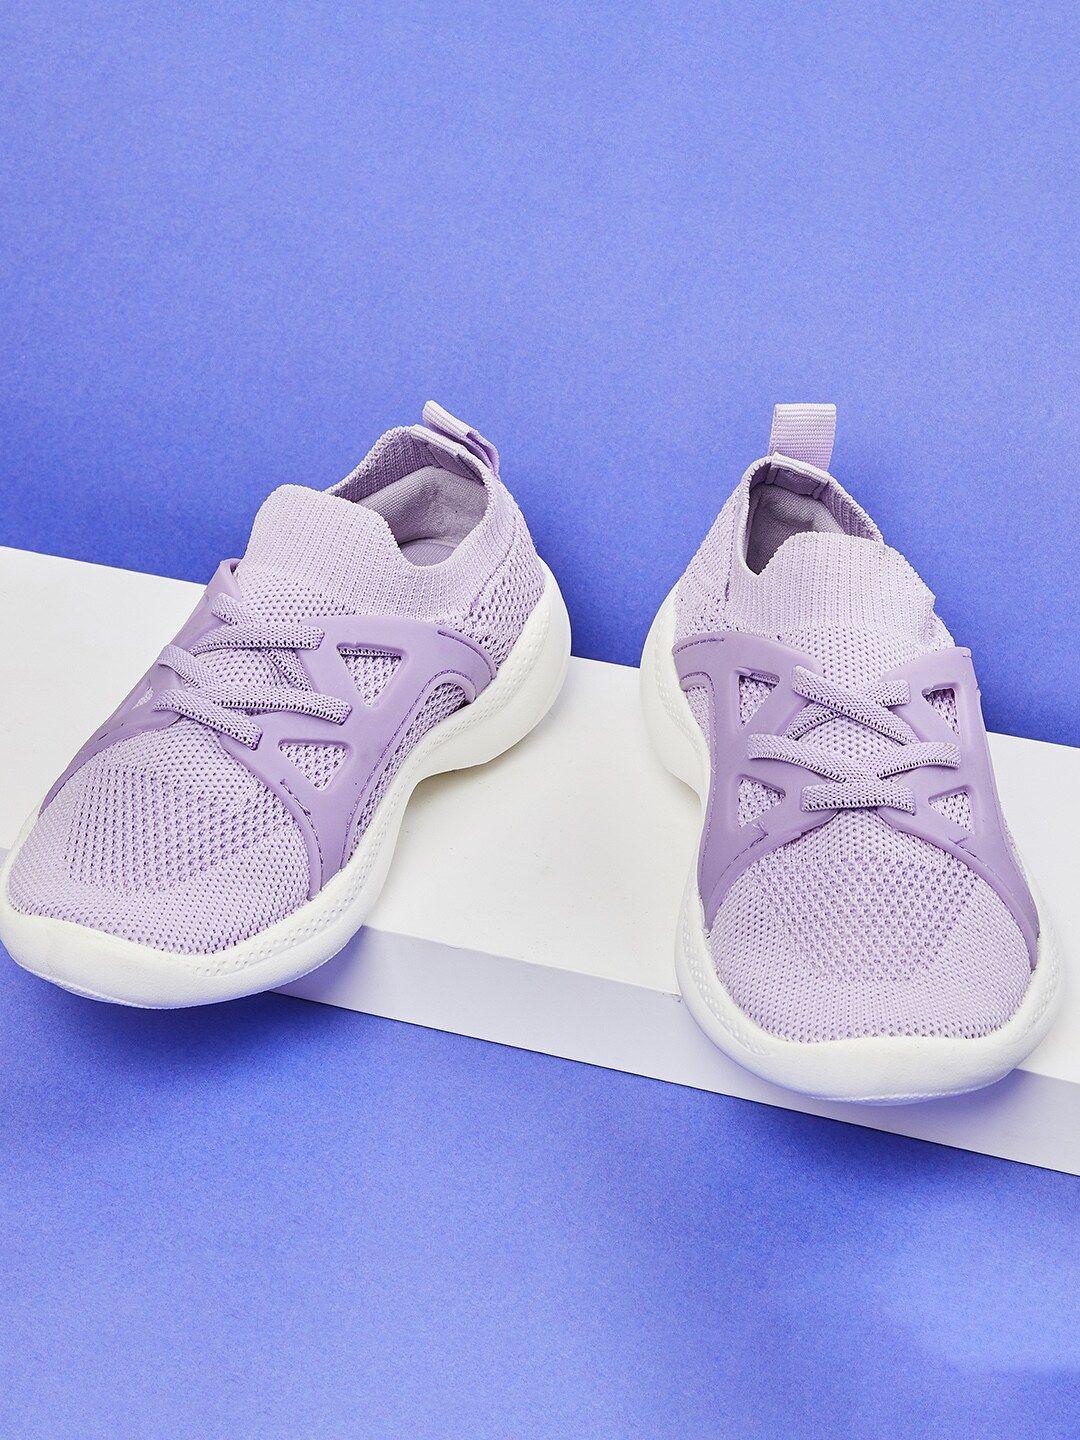 max girls purple running non-marking shoes